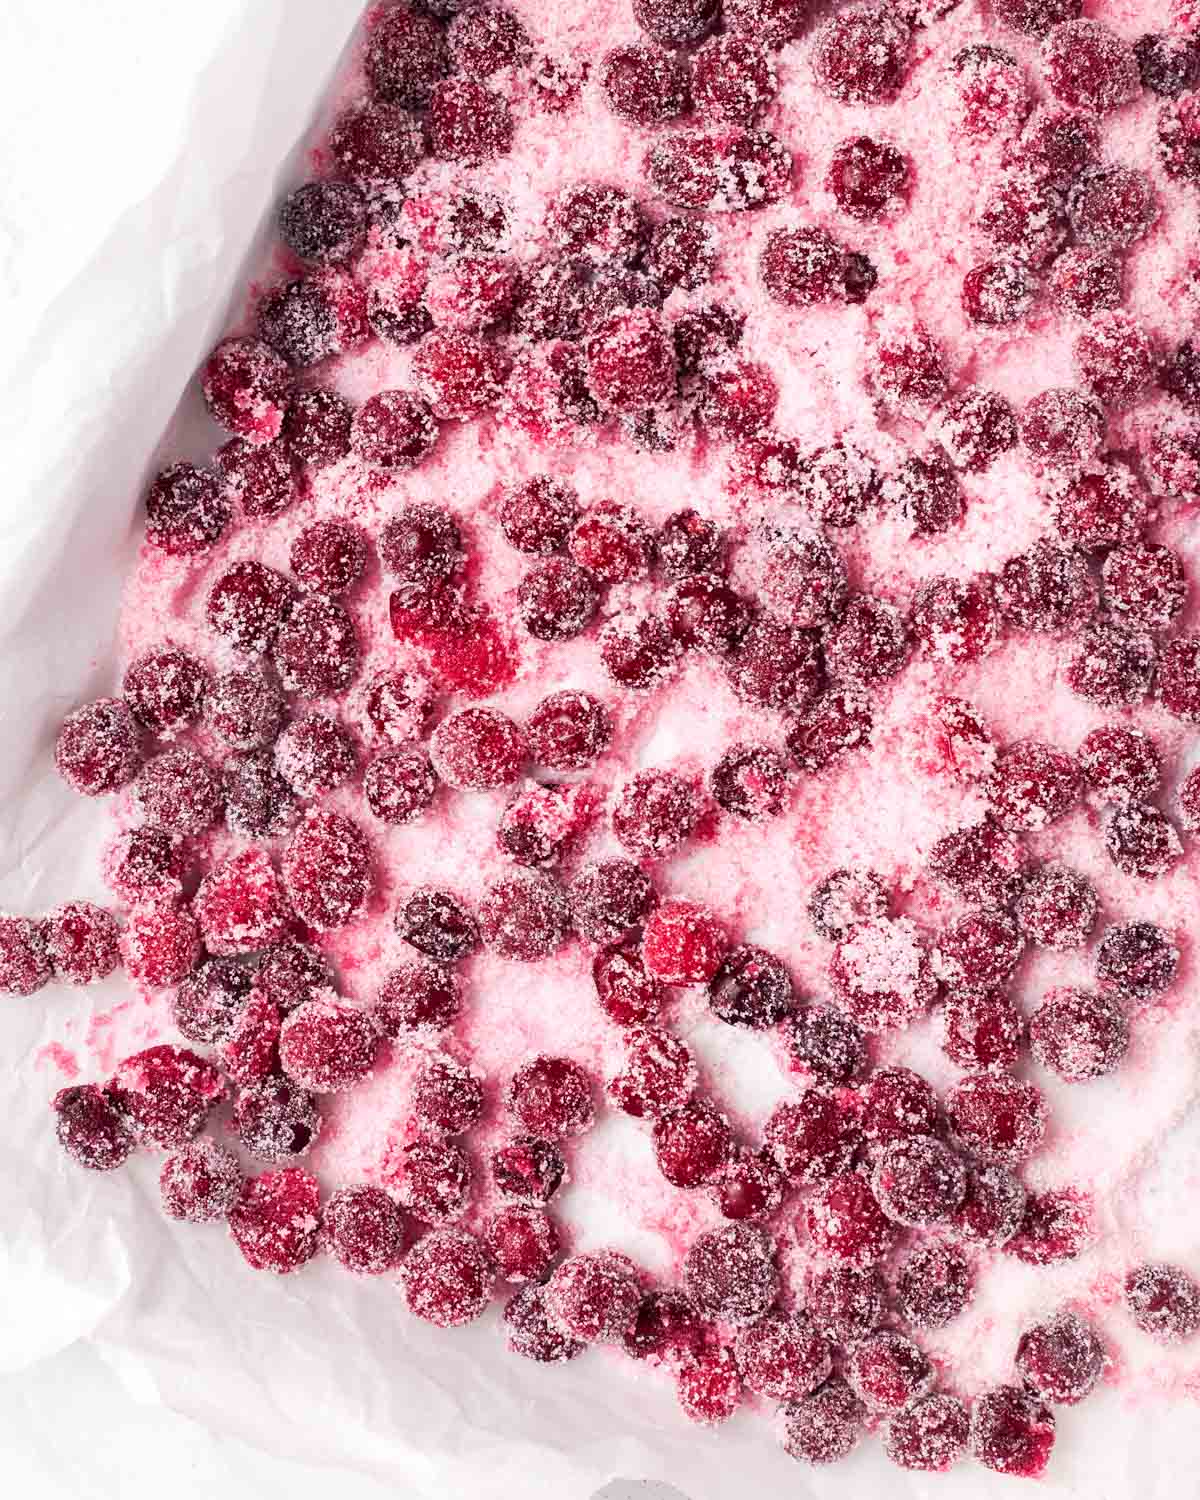 cranberries rolling in granulated sugar